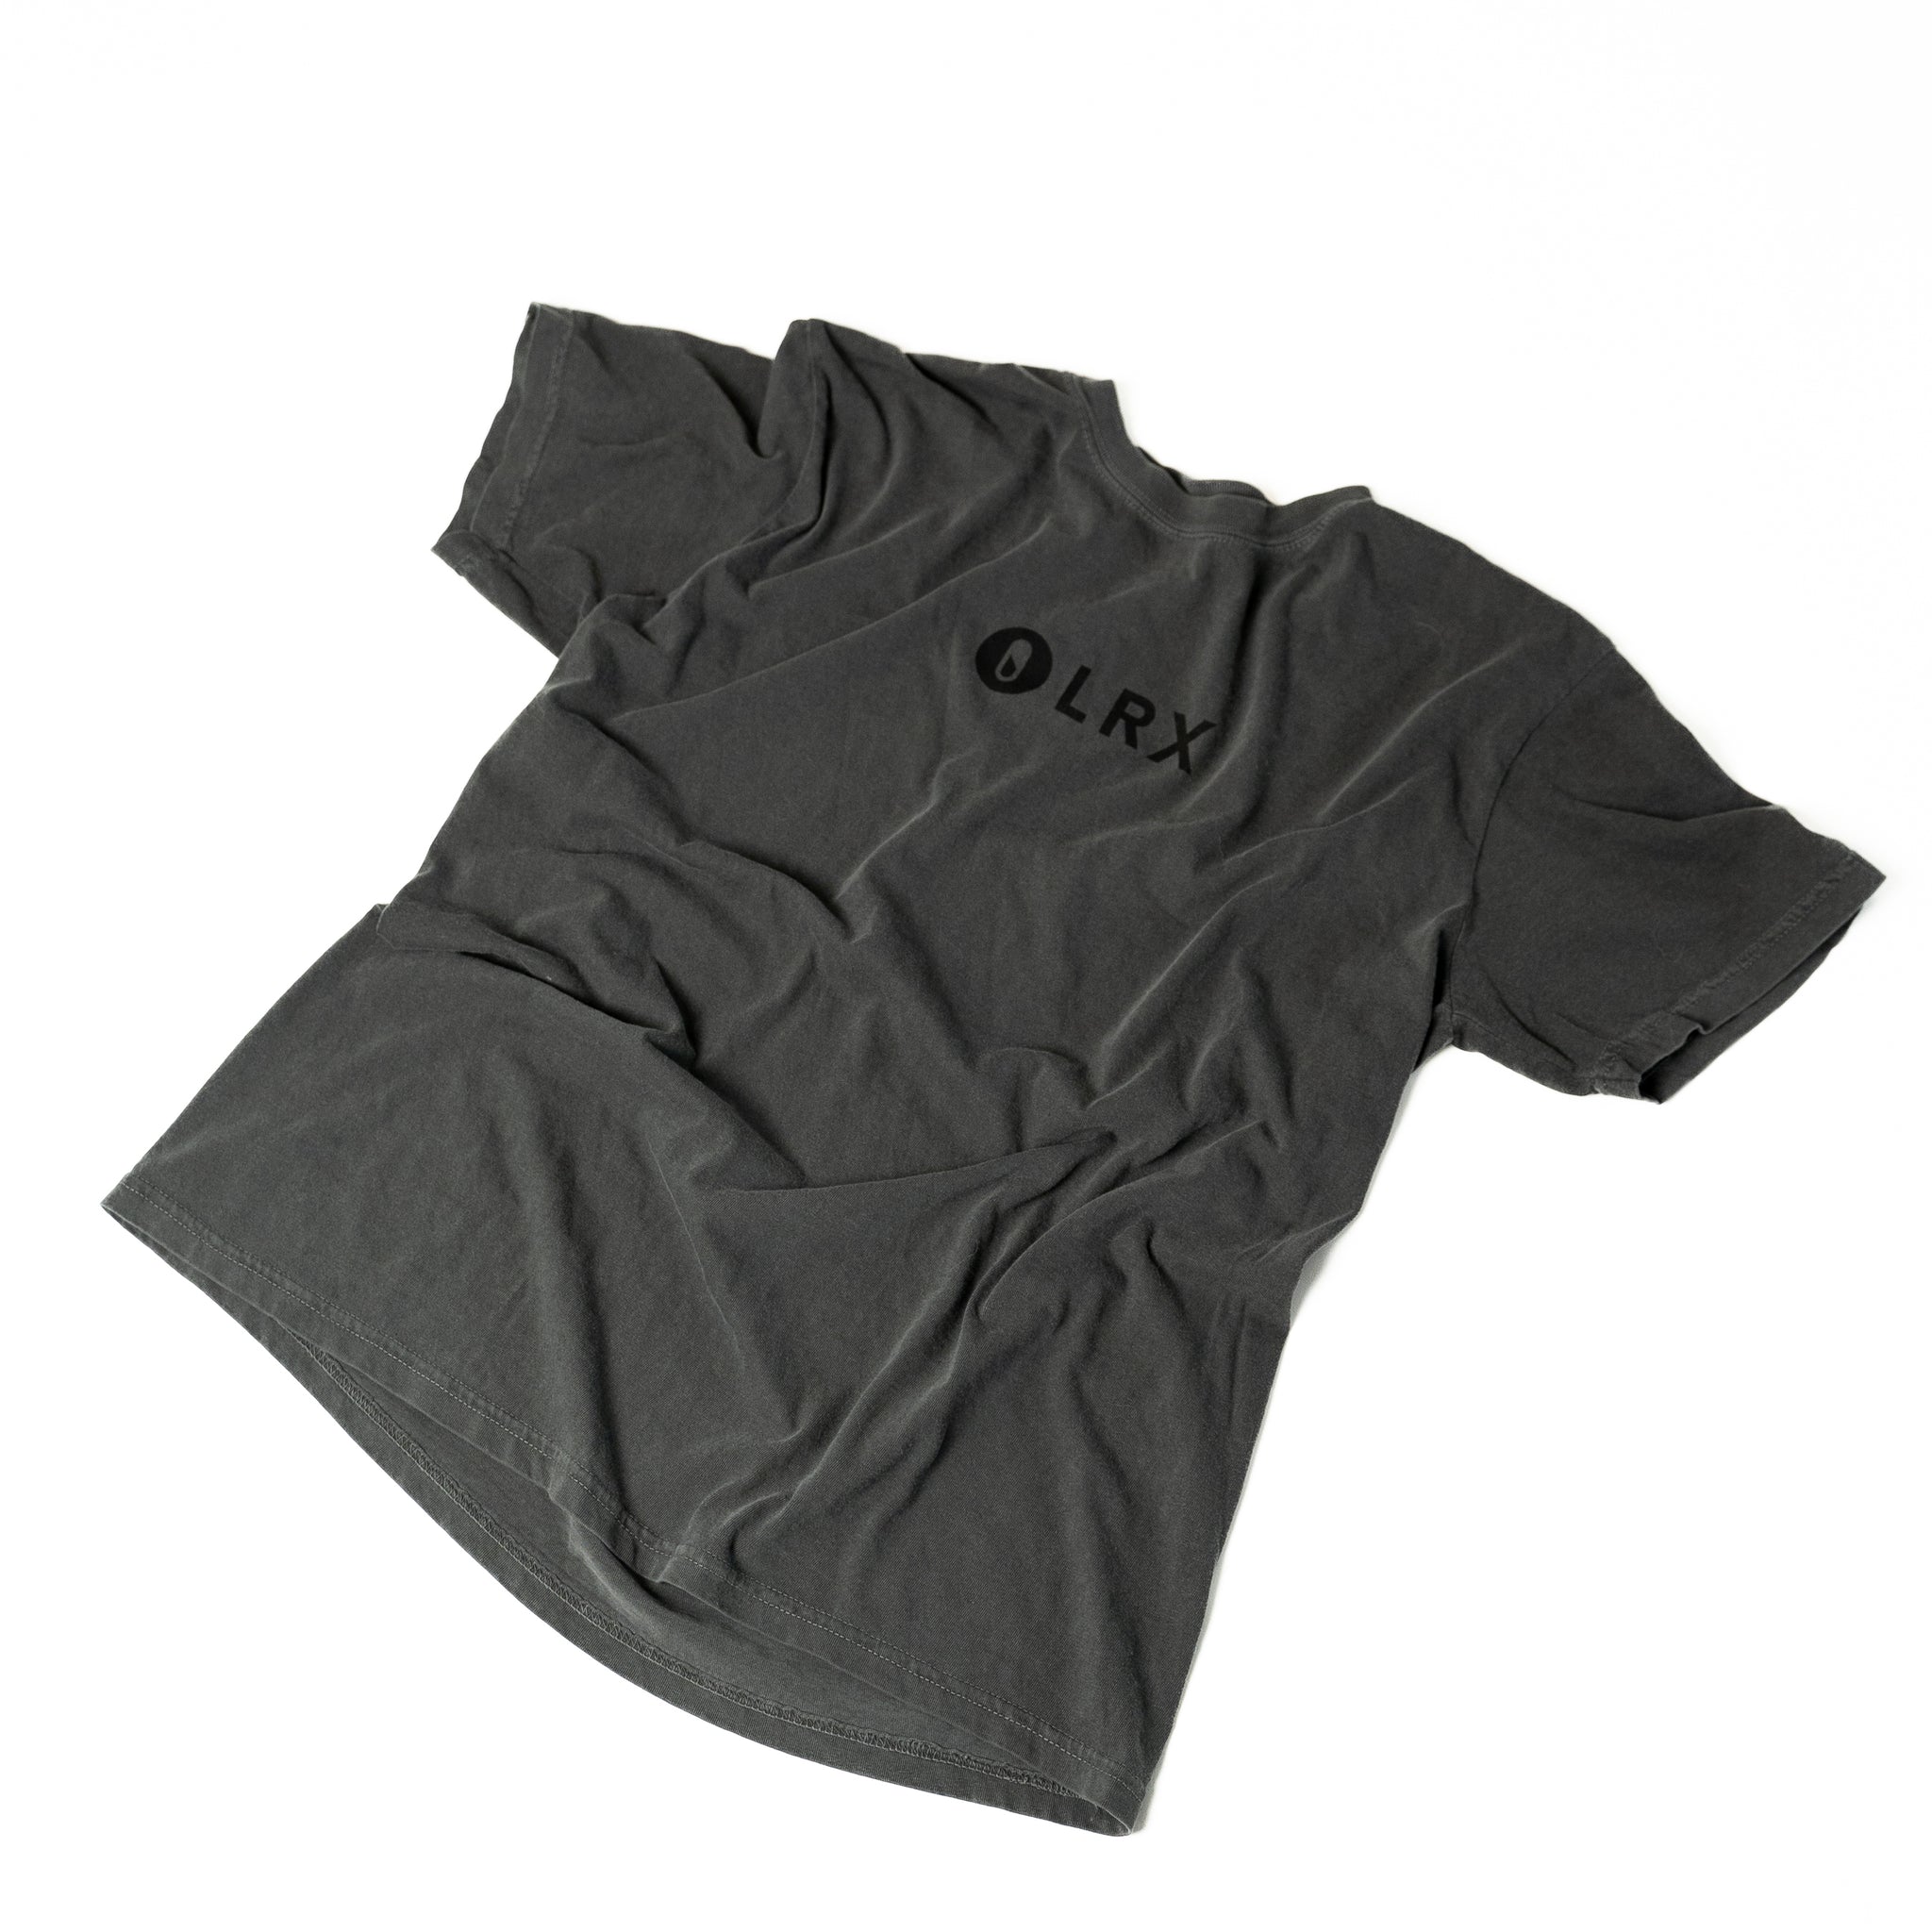 The LRX Shirt - Washed Grey